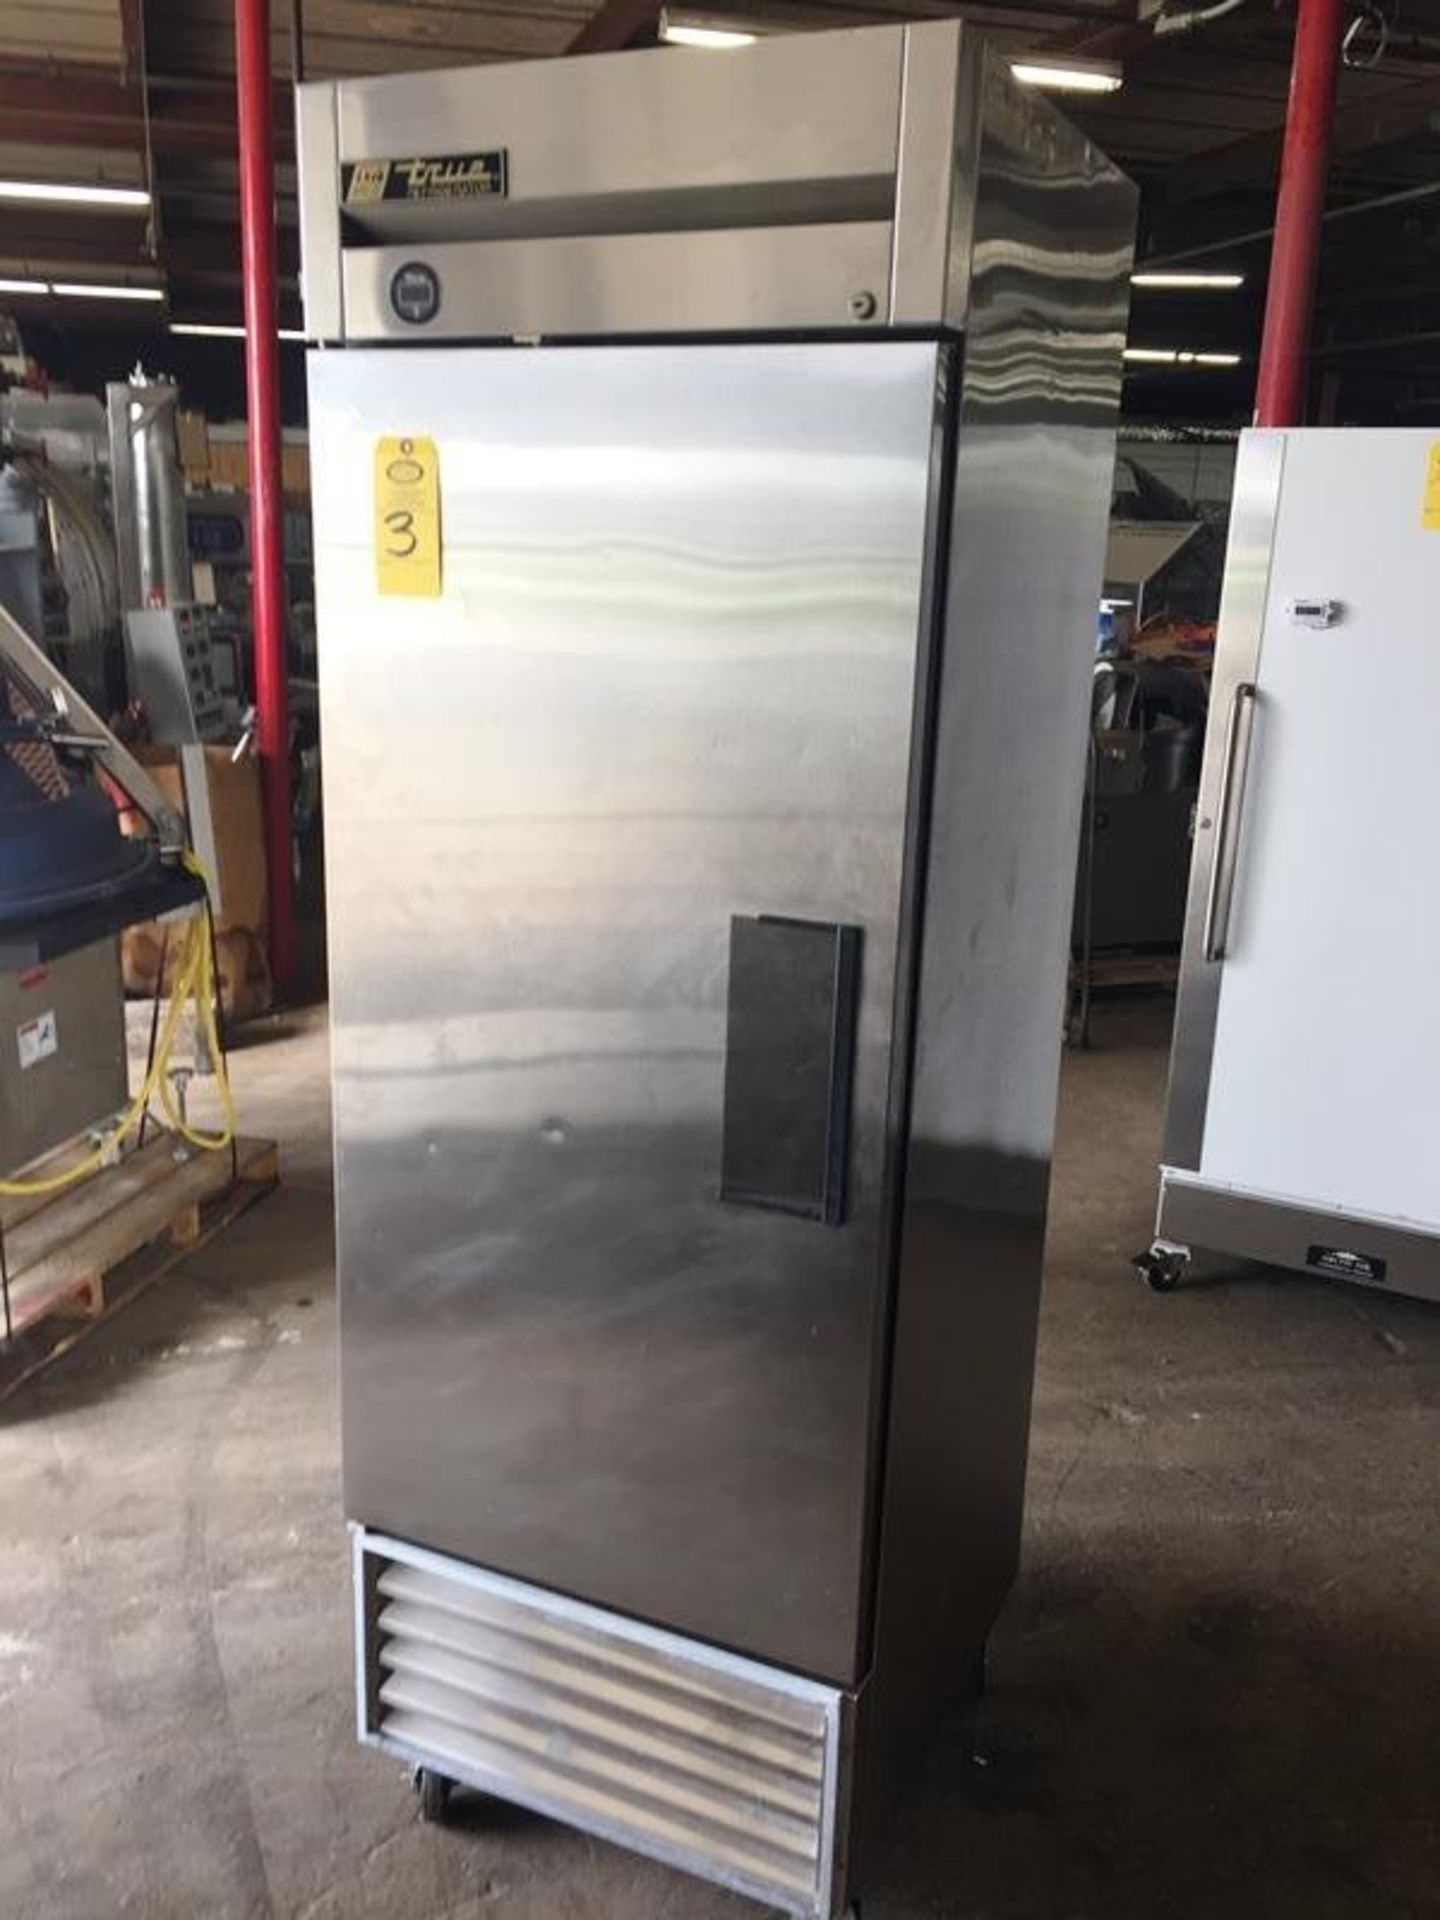 True Mdl. TS-23 Stainless Steel Single Door Refrigerator, refrigerant R134A, Ser. #12002327, overall